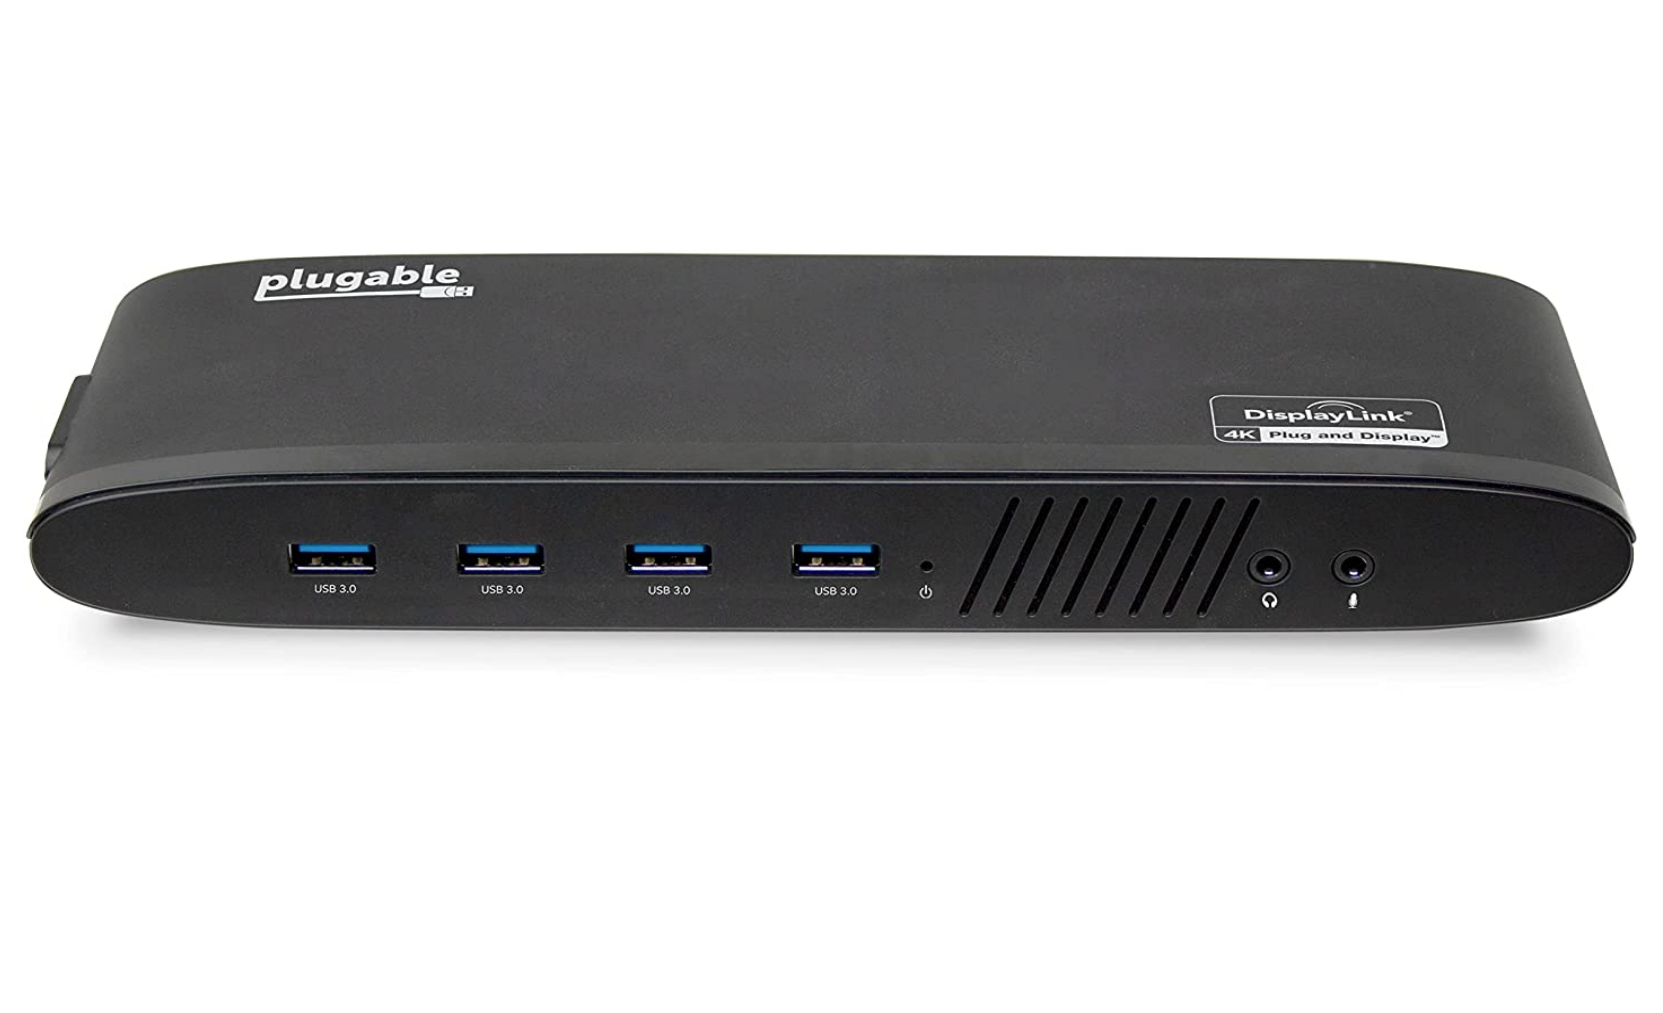 Plugable UD-6950H USB 3.0 Dual 4K Docking Station